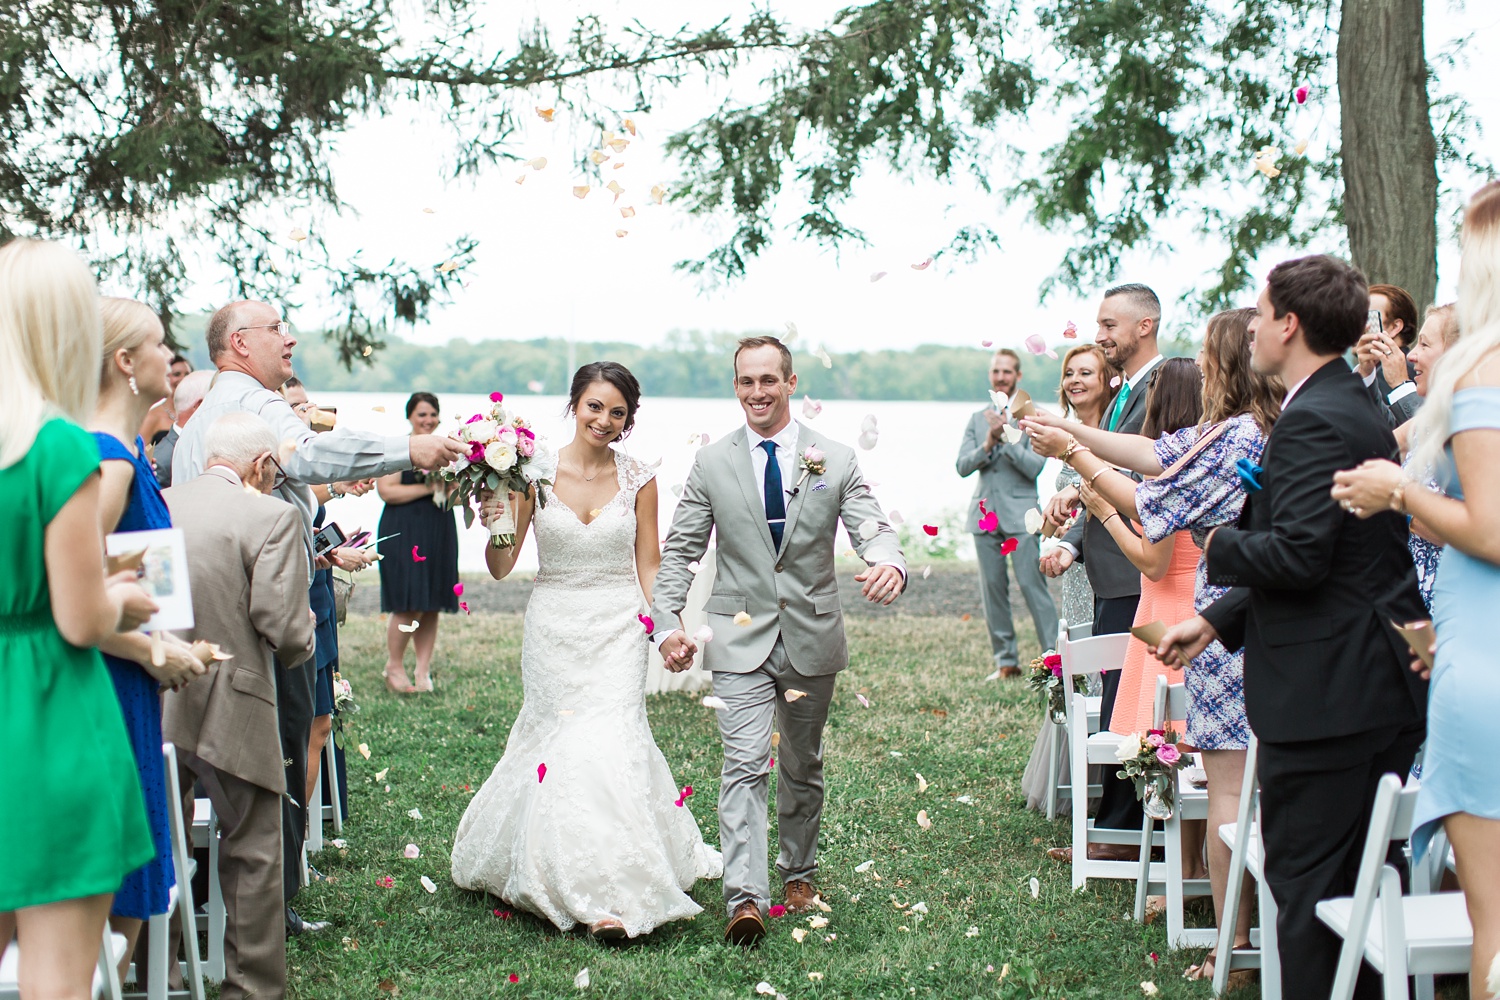 Glen Foerd Mansion Wedding Photography | Romantic Summer Wedding | Nicole and Jason